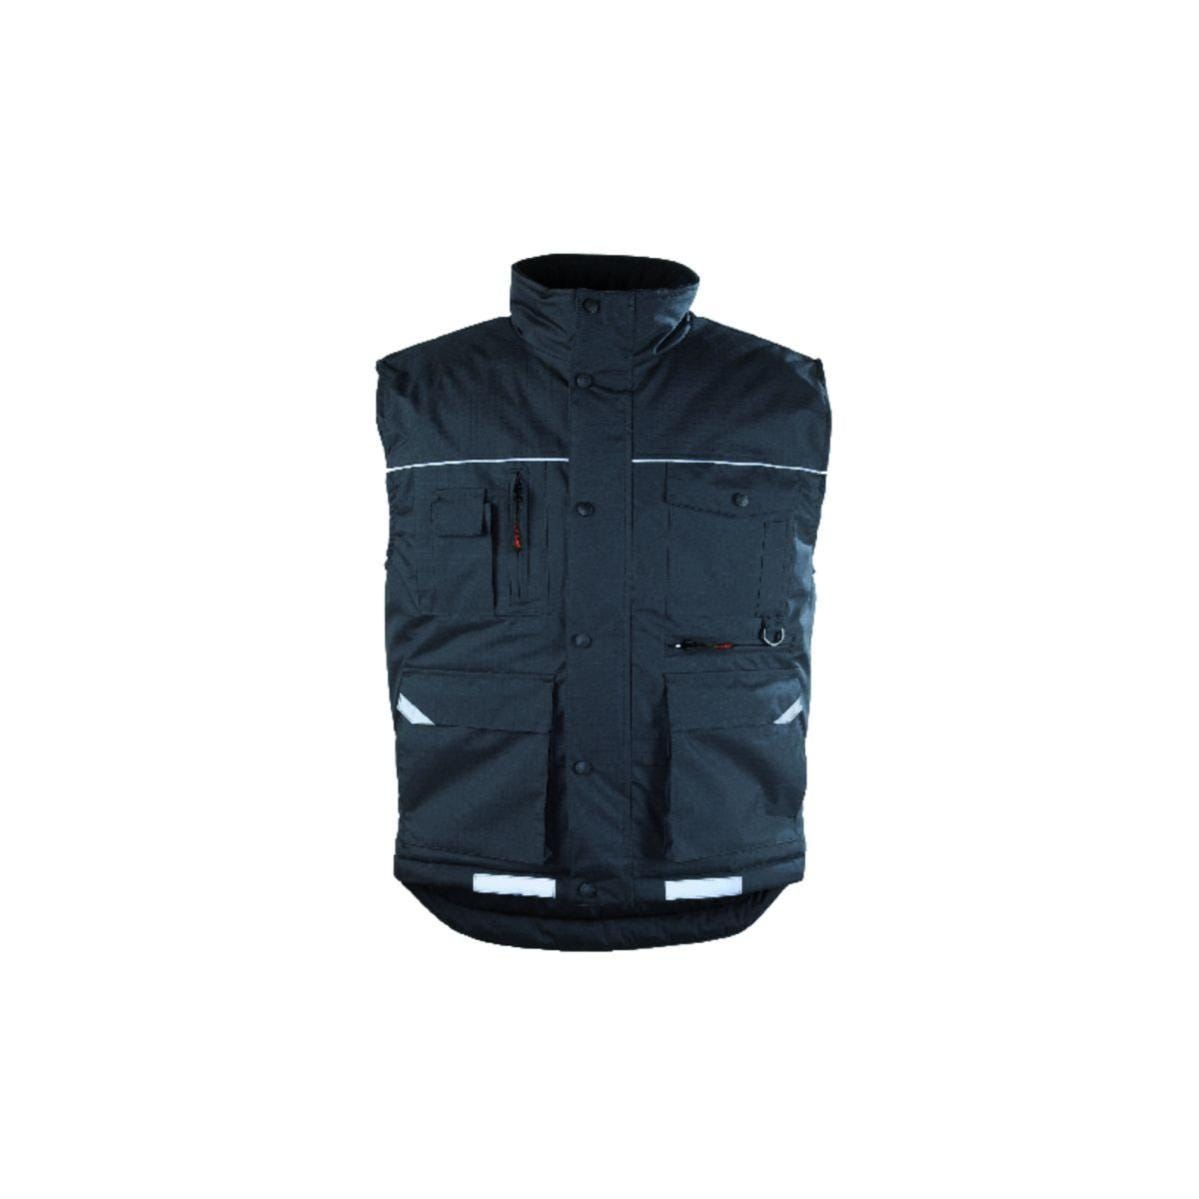 RIPSTOP Gilet Froid noir, Polyester Risptop + Matelassage 180g/m² - Coverguard - Taille XL 0